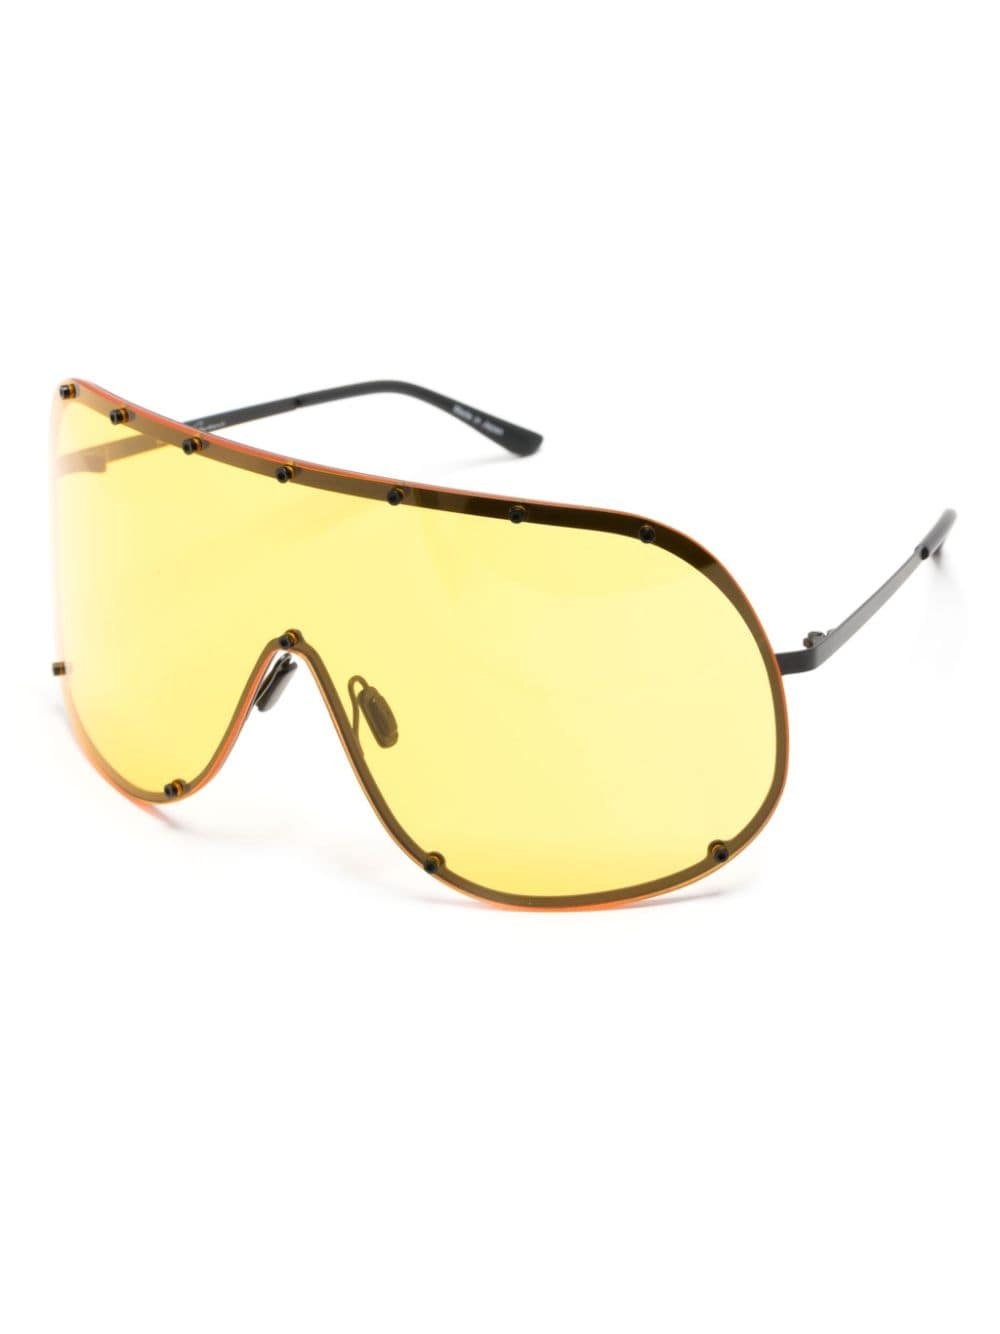 shield-frame sunglasses - 2